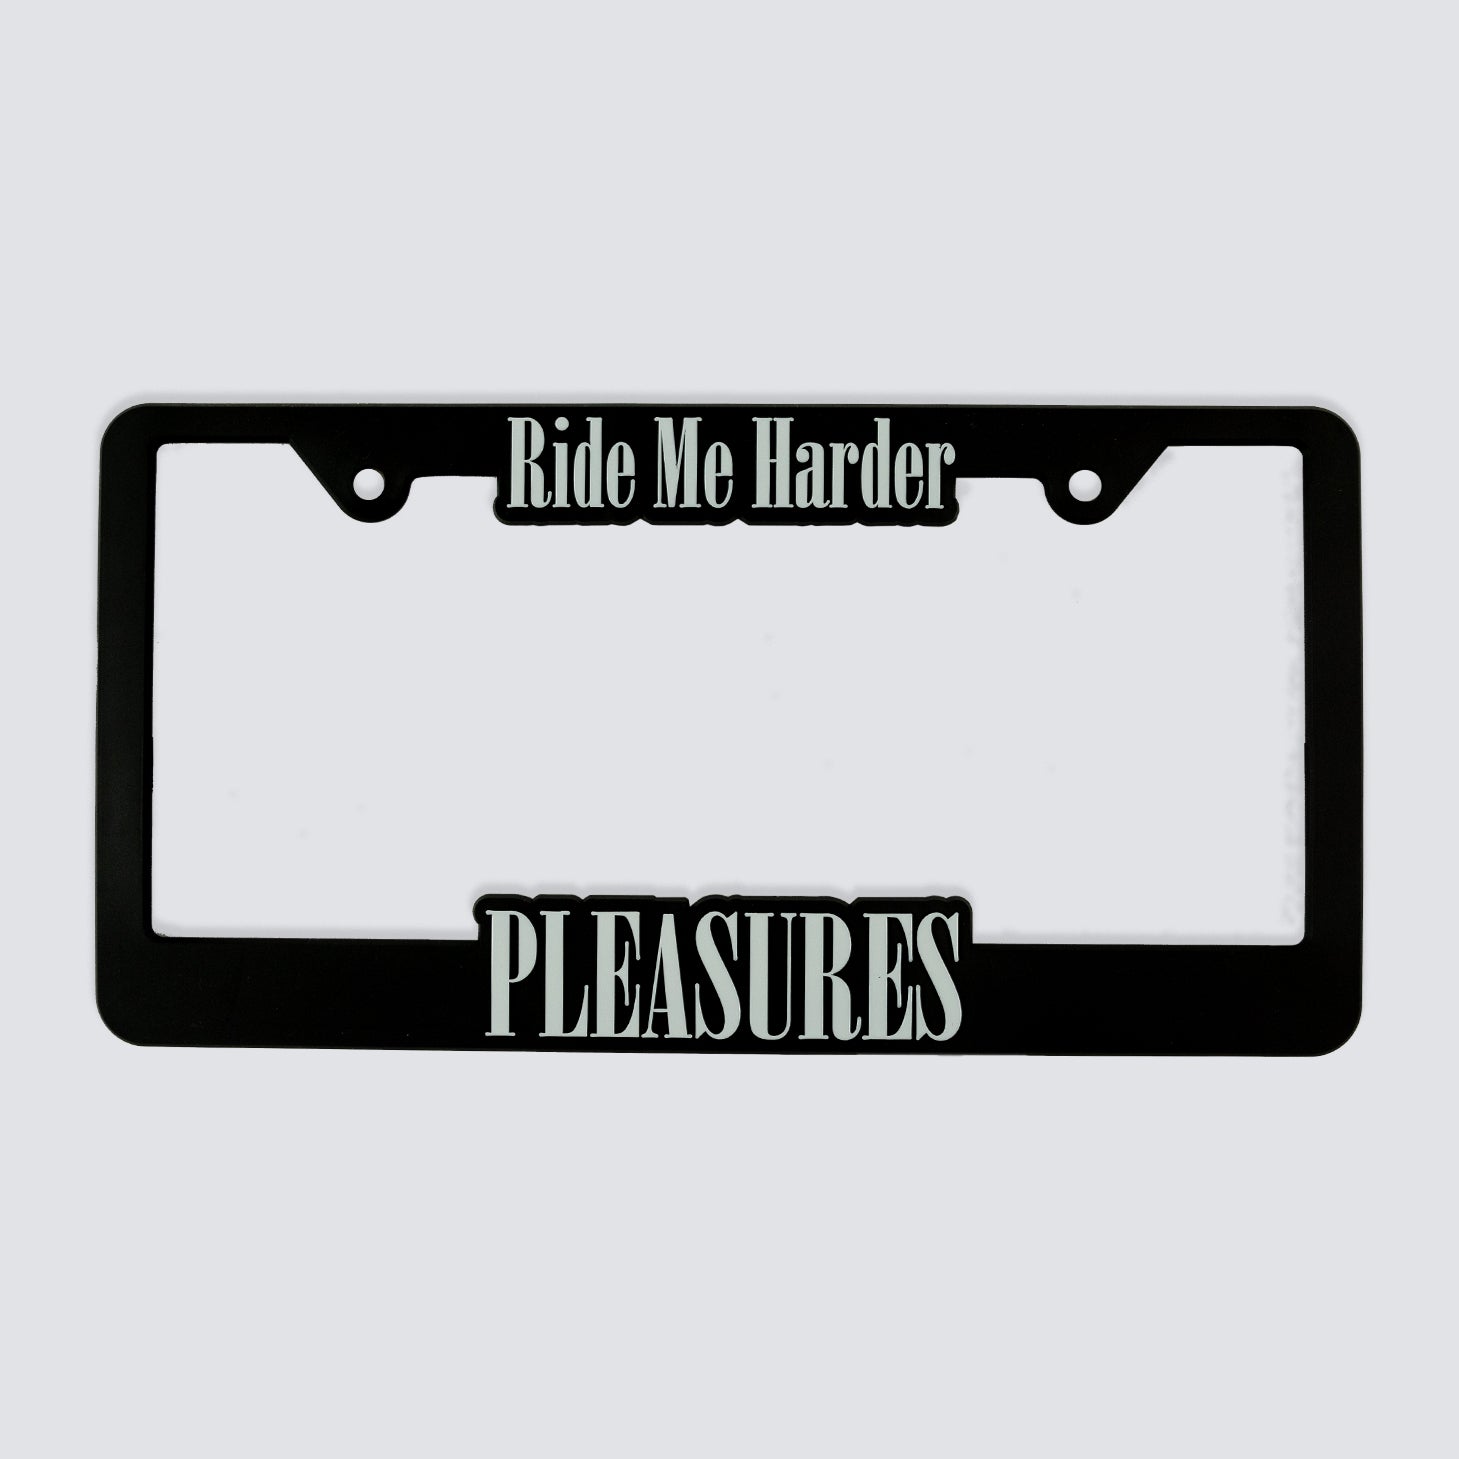 Ride Me License Plate Frame in Black